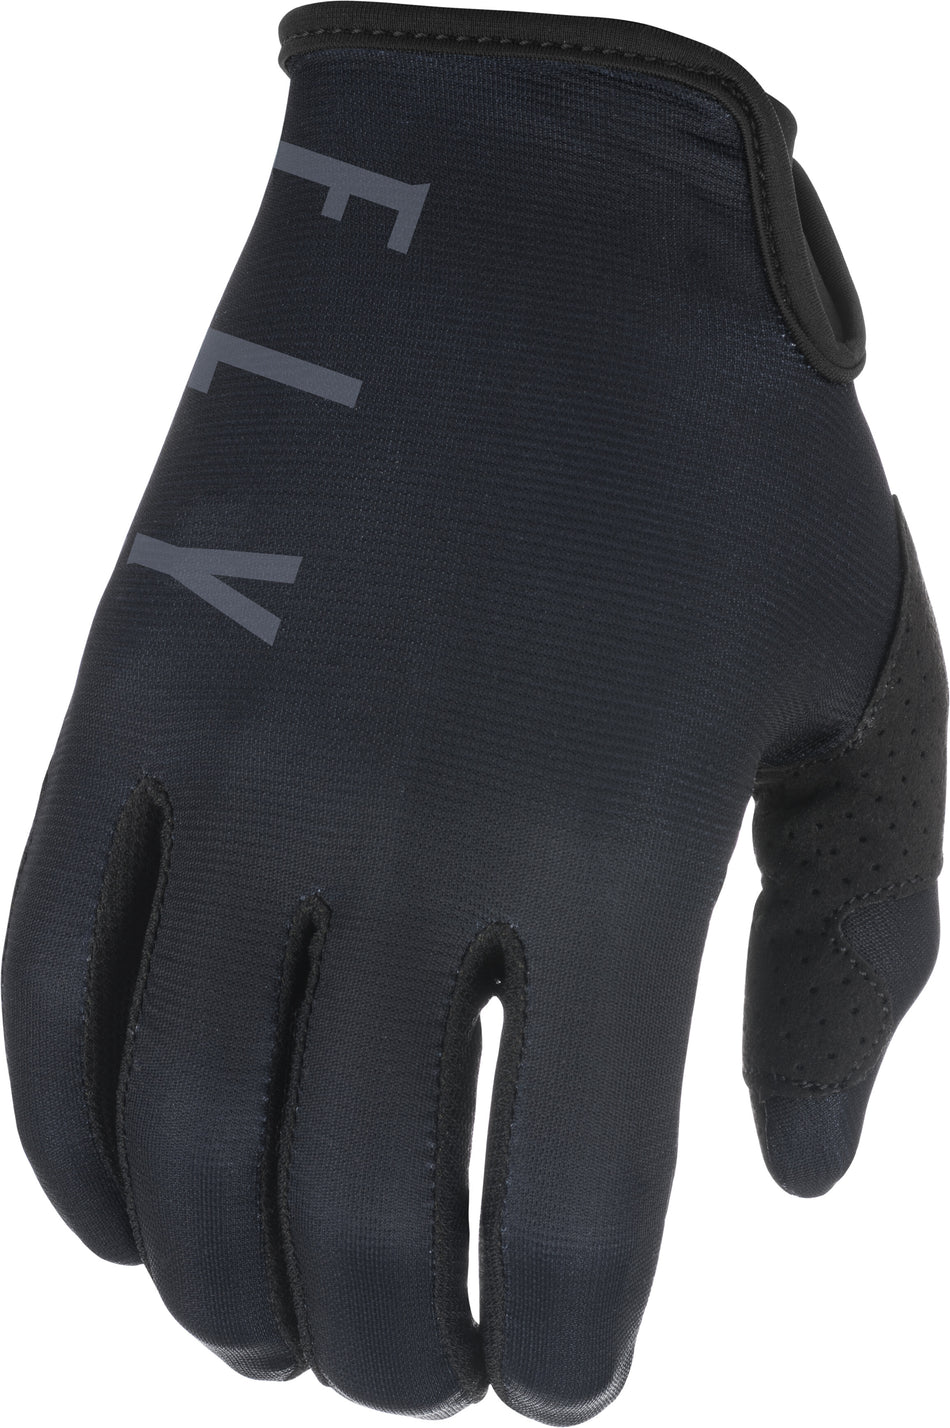 FLY RACING Lite Gloves Black/Grey Sz 11 374-71011